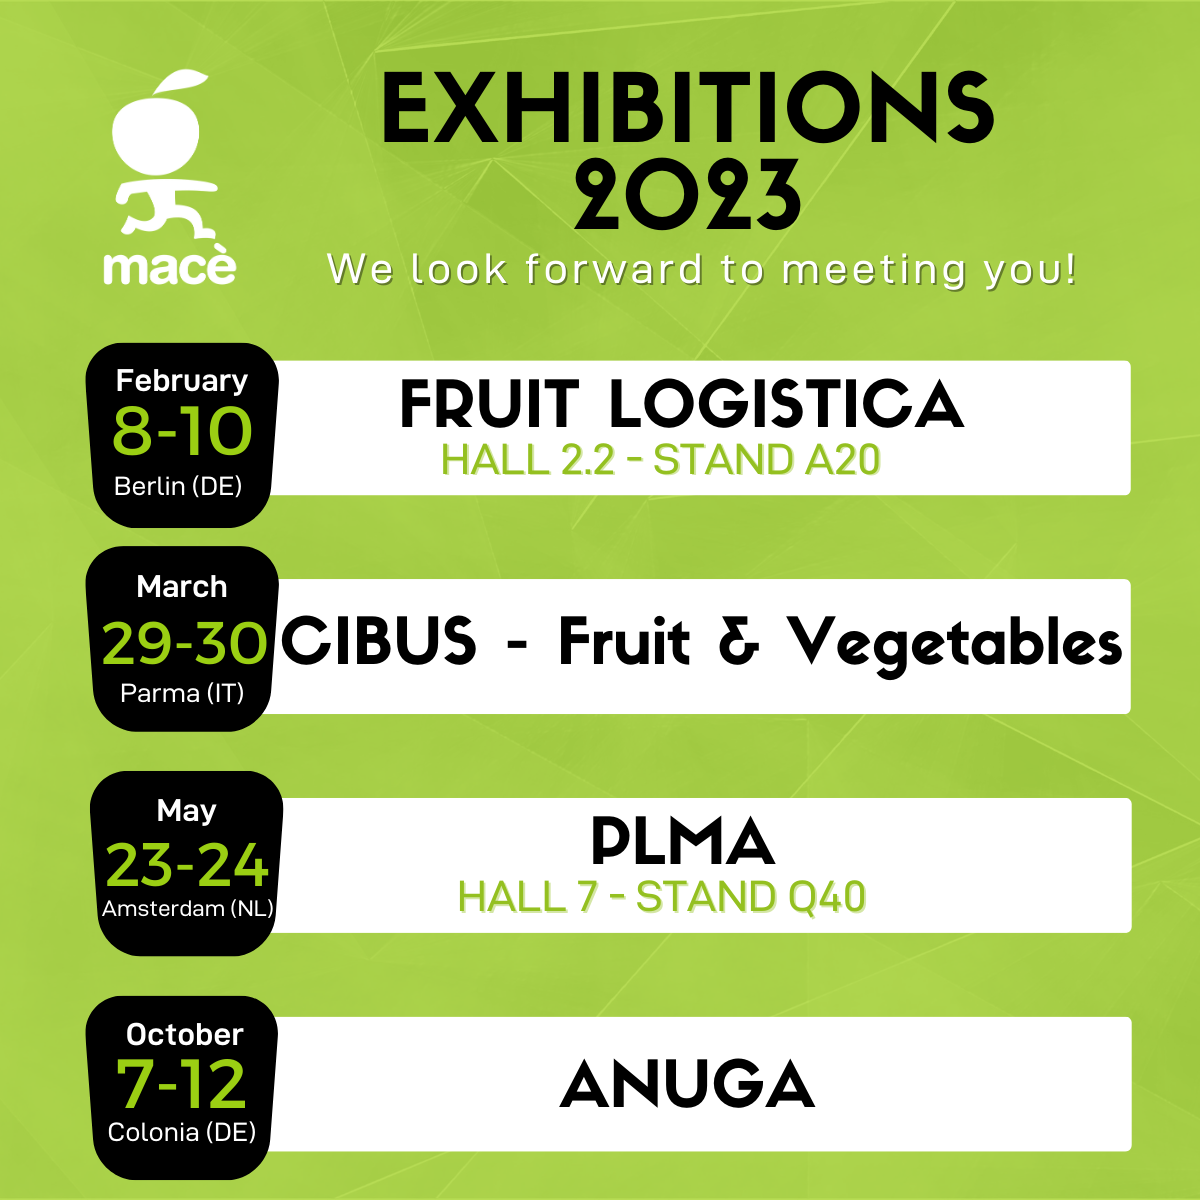 calendario fiere 2023 a cui Mac partecipa: fruit logistica 8-10 febbraio,  Cibus 29-30 marzo, PLMA 23-24 maggio, ANUGA 7-12 ottobre